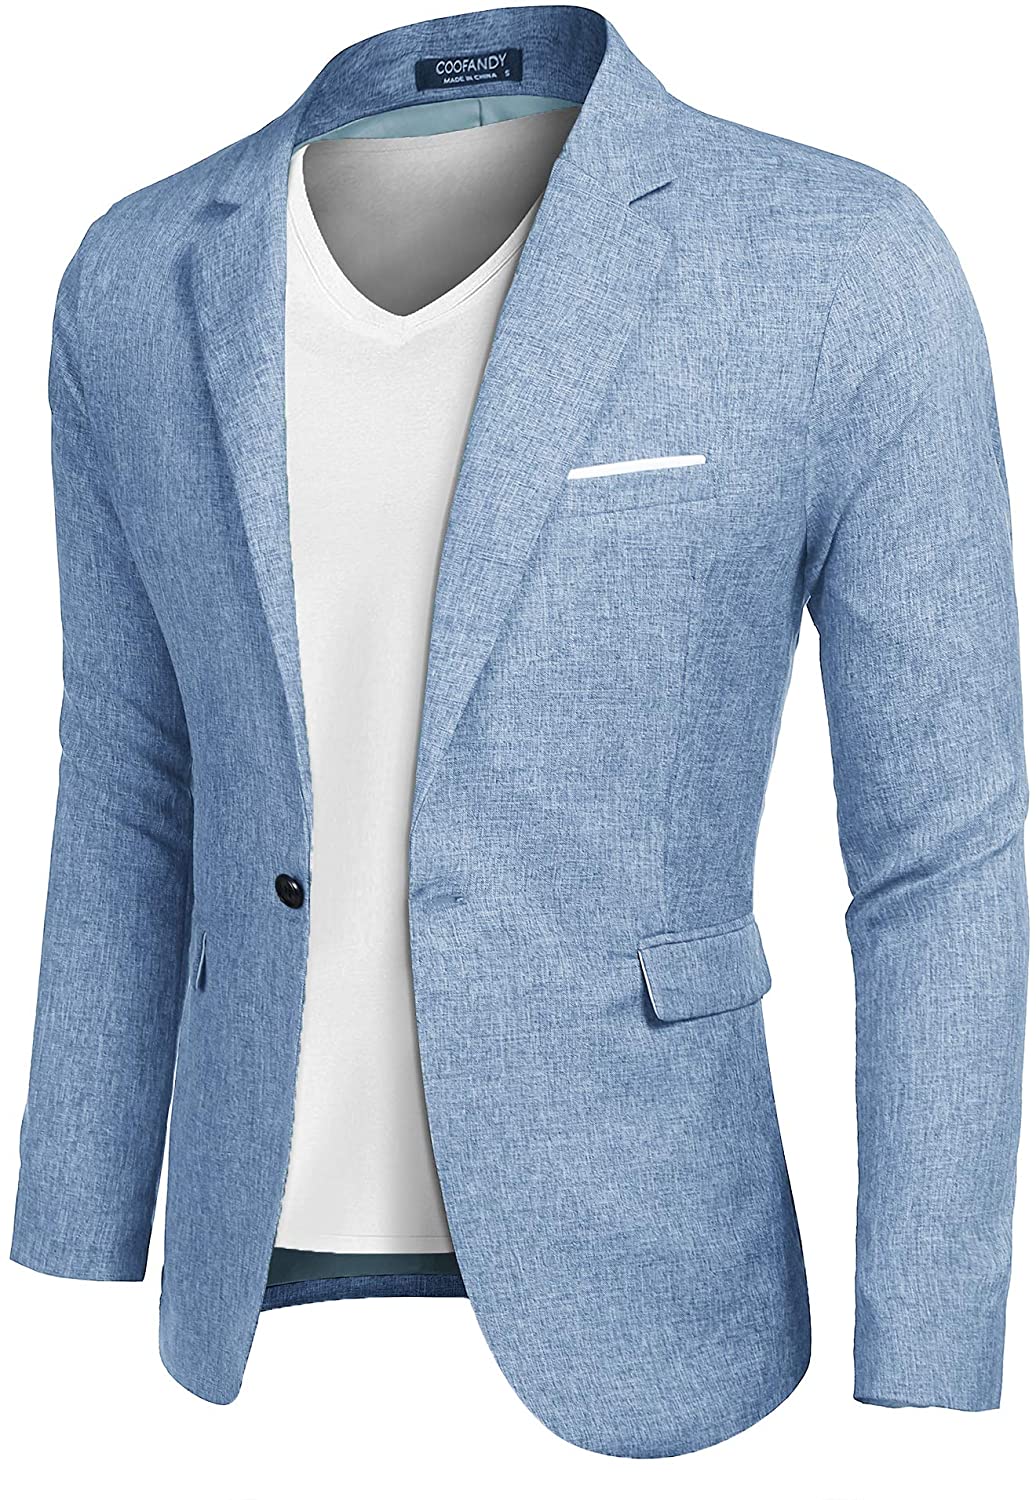 COOFANDY Mens Casual Blazer Button Suit Lightweight Sport Coat Jacket 